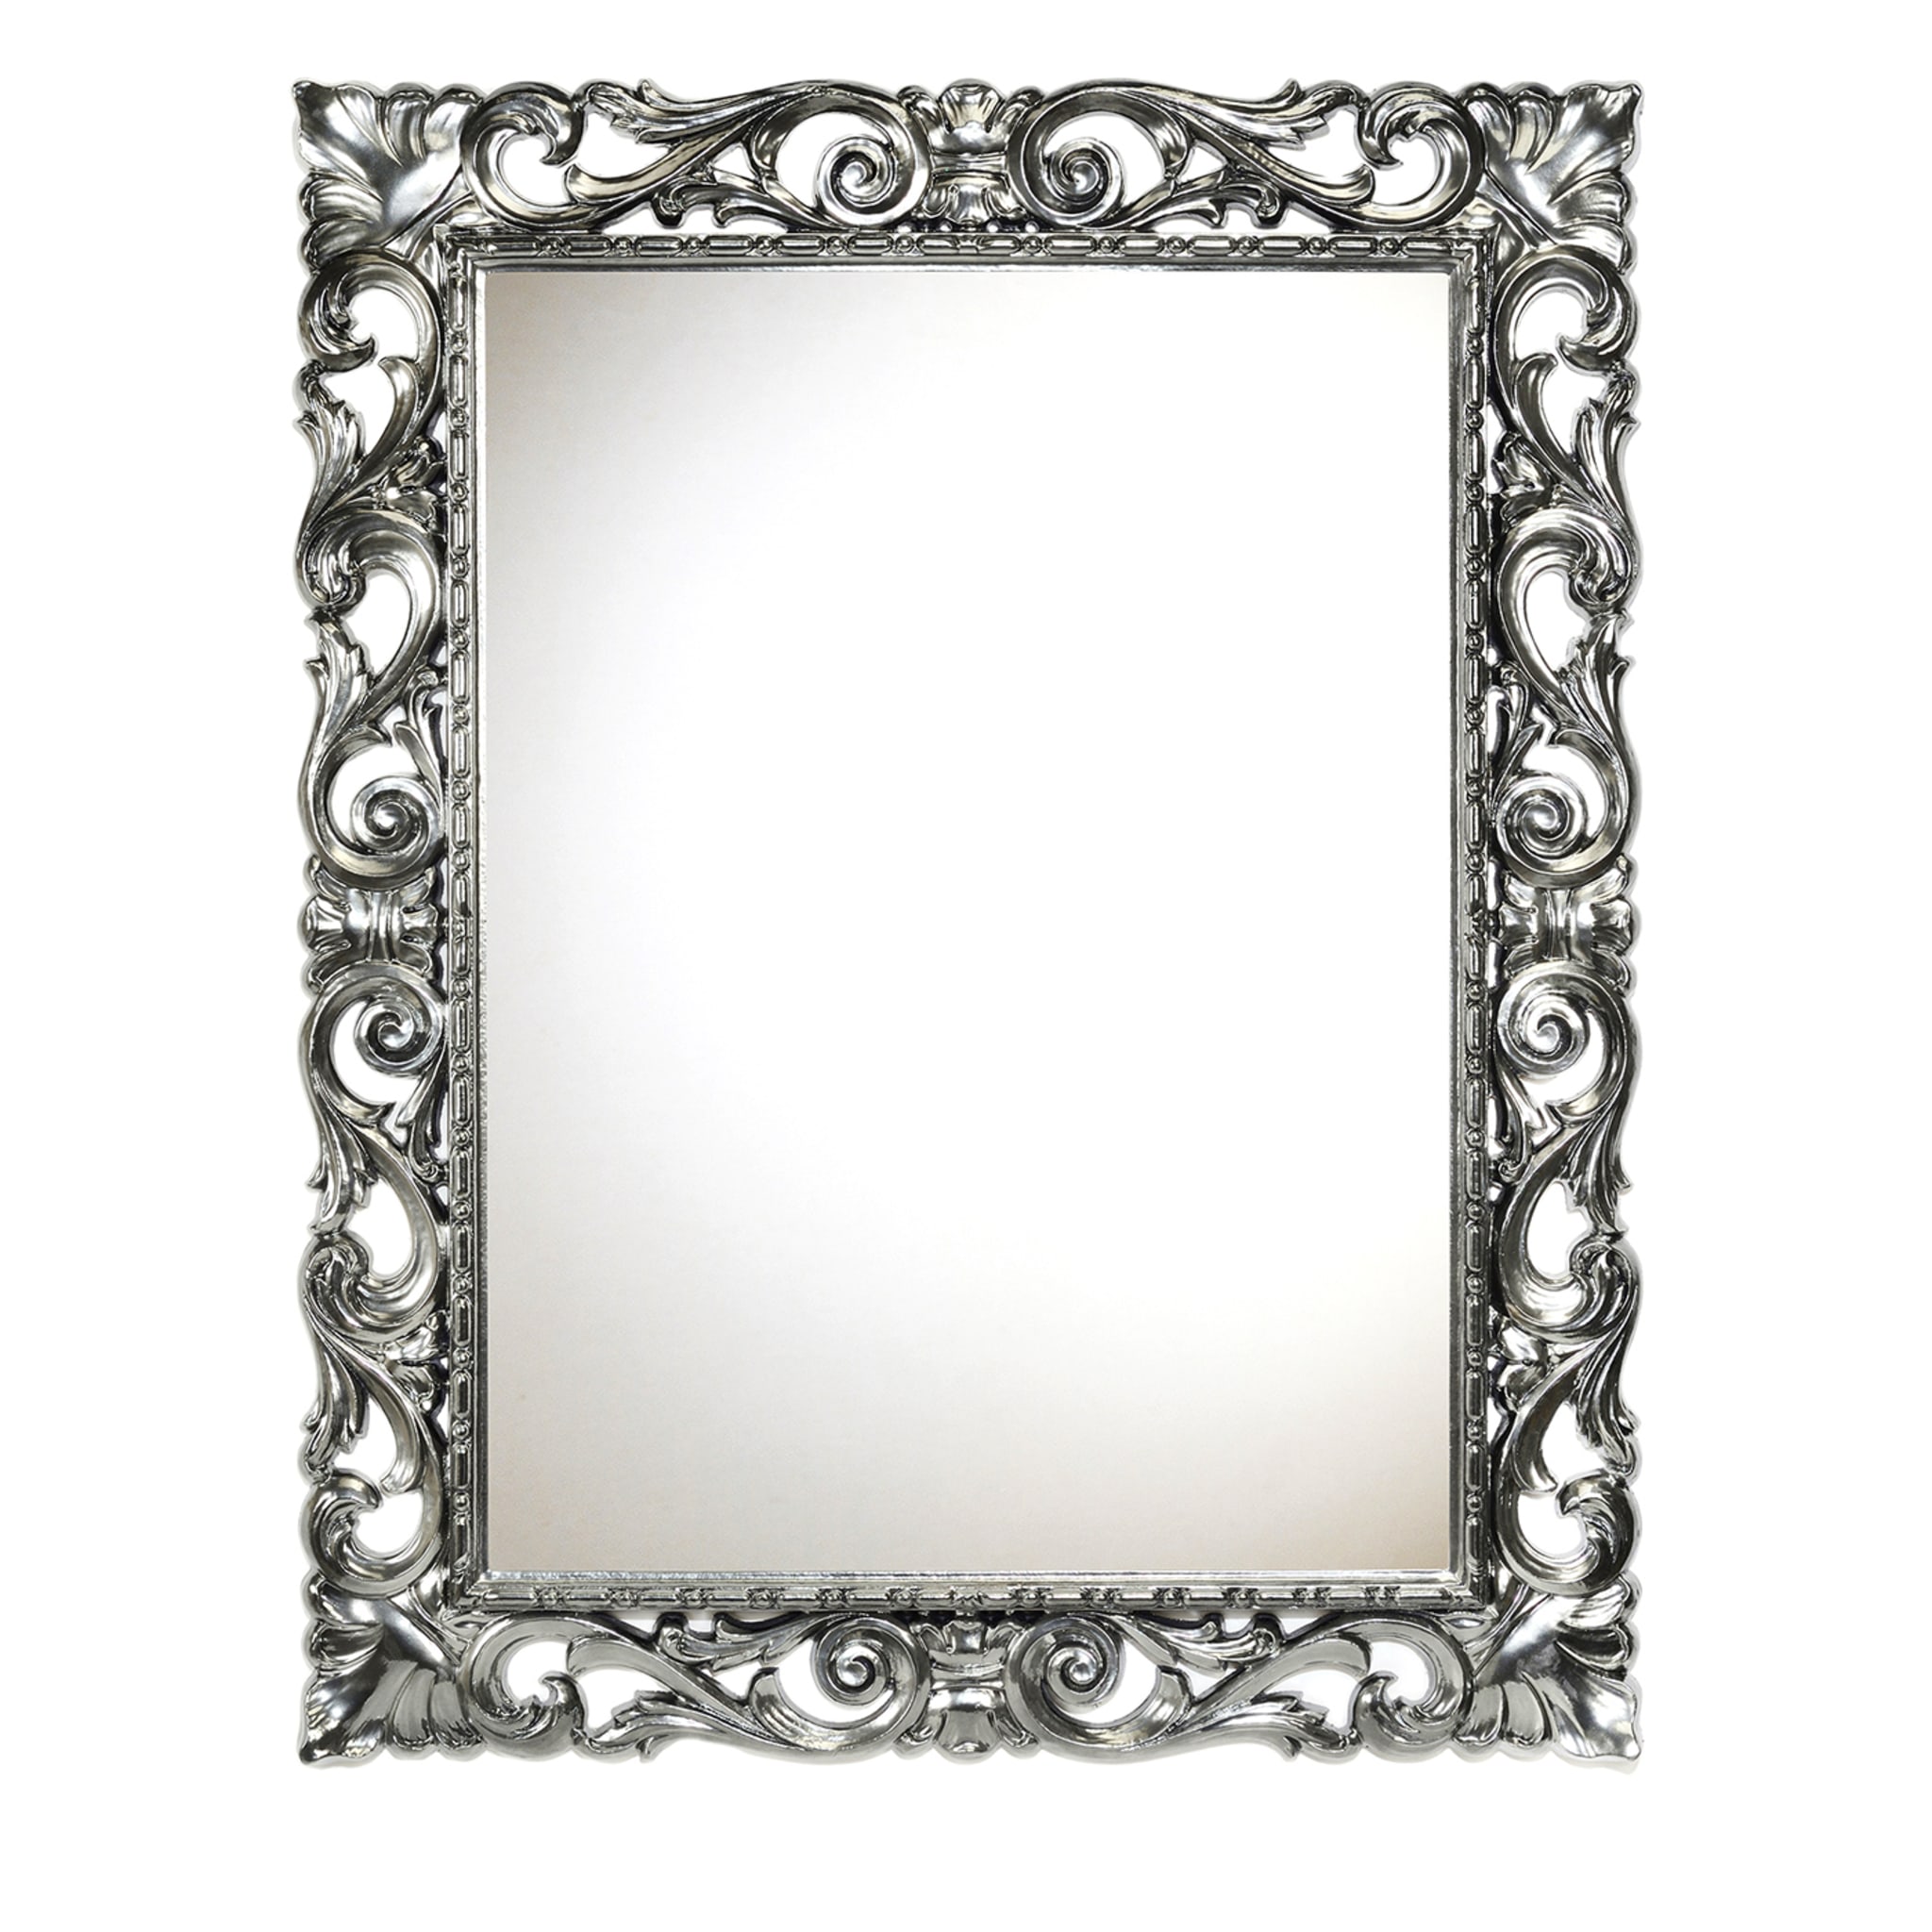 Belgravia Chromed Silver Wall Mirror - Main view